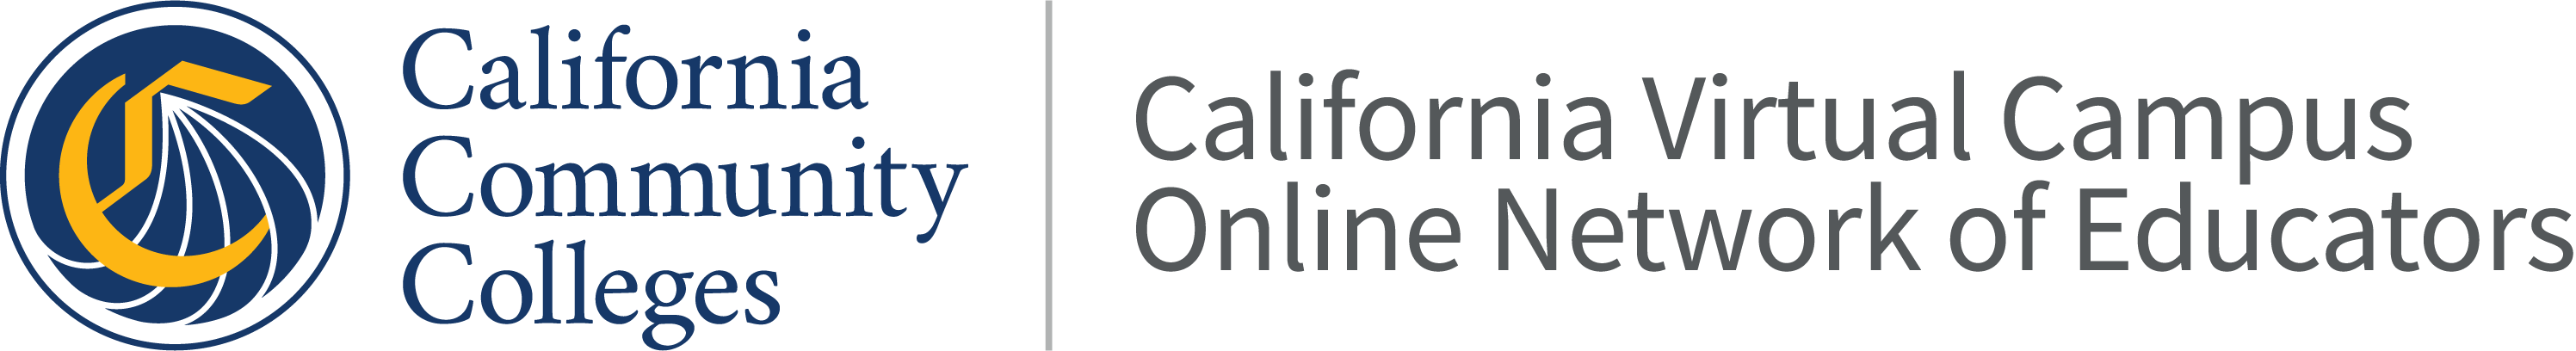 Online Network of Educators Logo